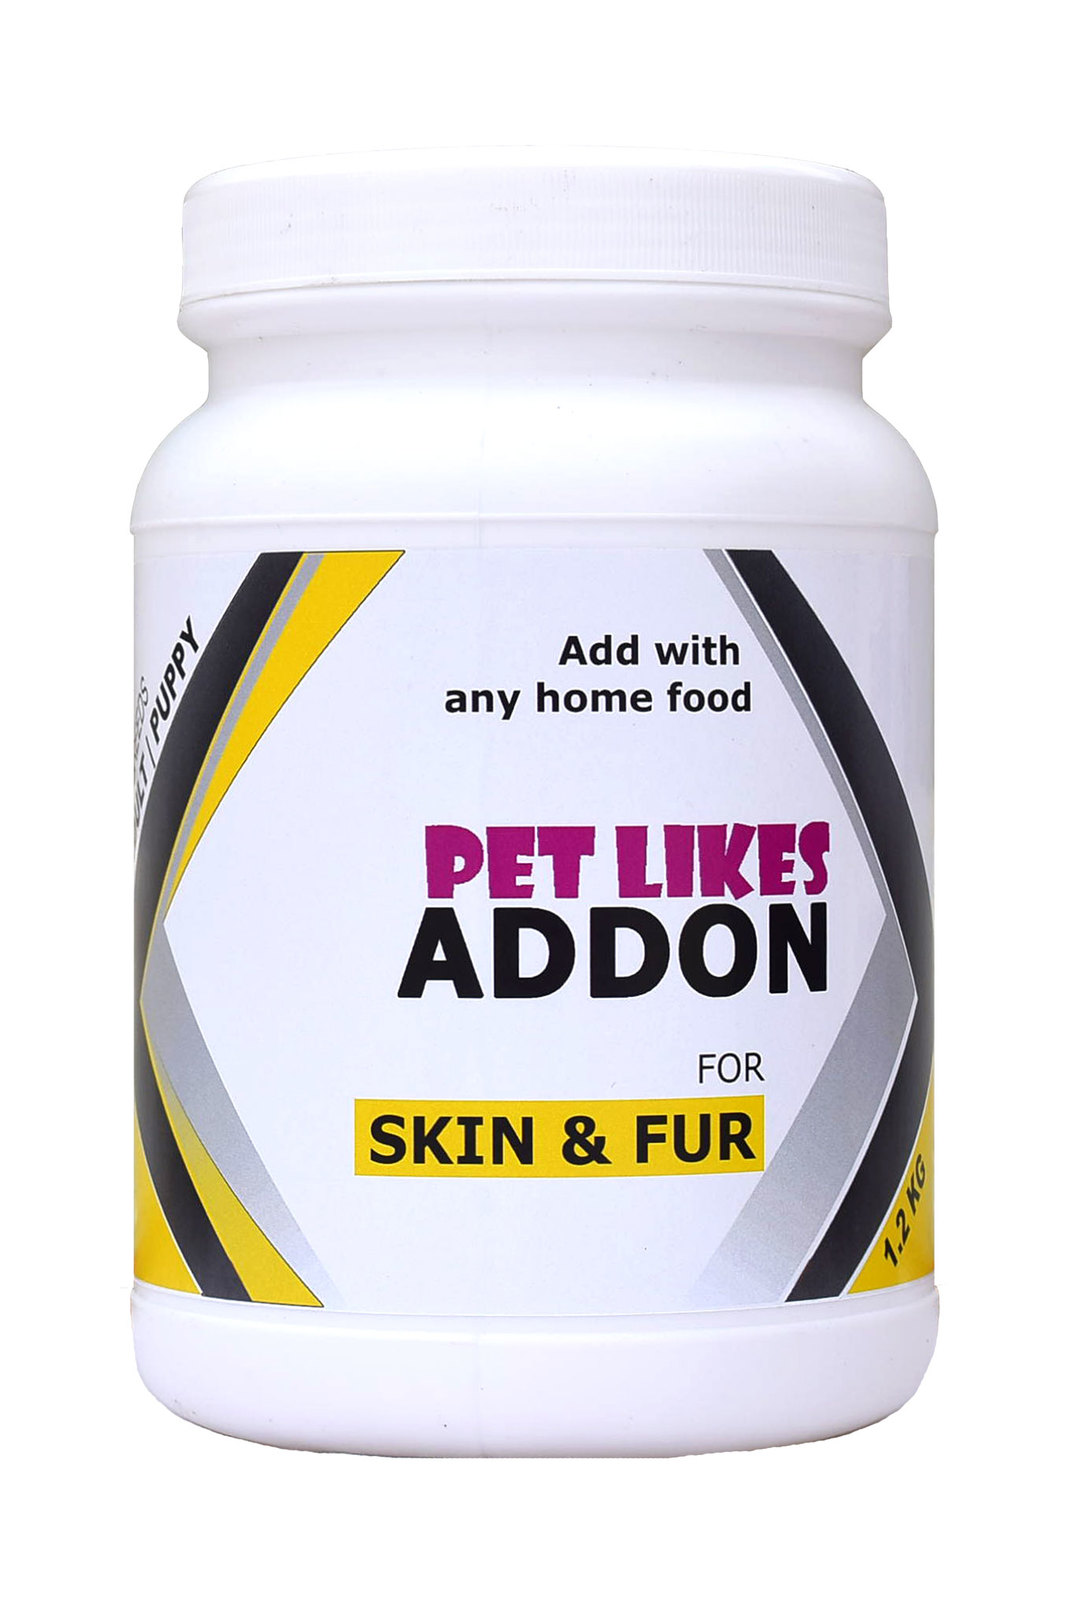 Pet Likes ADD ON Skin & Fur – 1.2 Kg. Dog Coat Shine In 4 Weeks